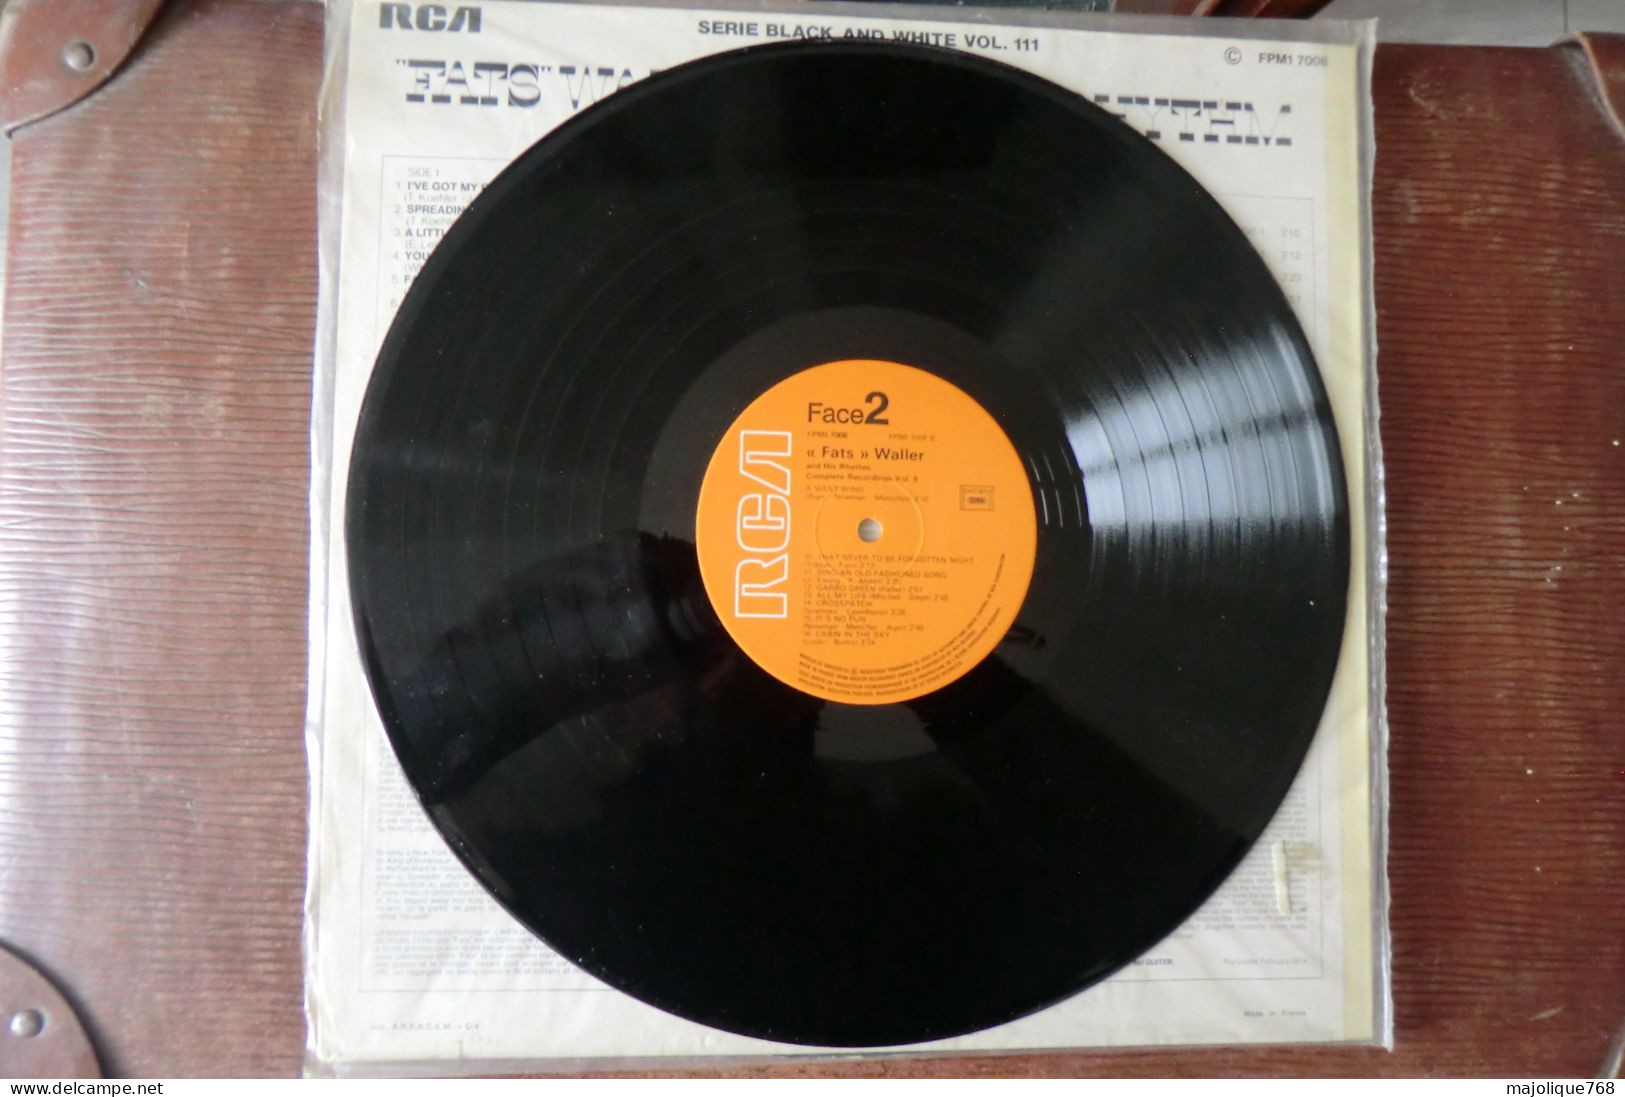 Disque De Fats Waller And His Rhythm (1935-1936) Volume 9 - RCA FPM1 7008 - France 1974 - Serie Black & White Vol 111 - Jazz